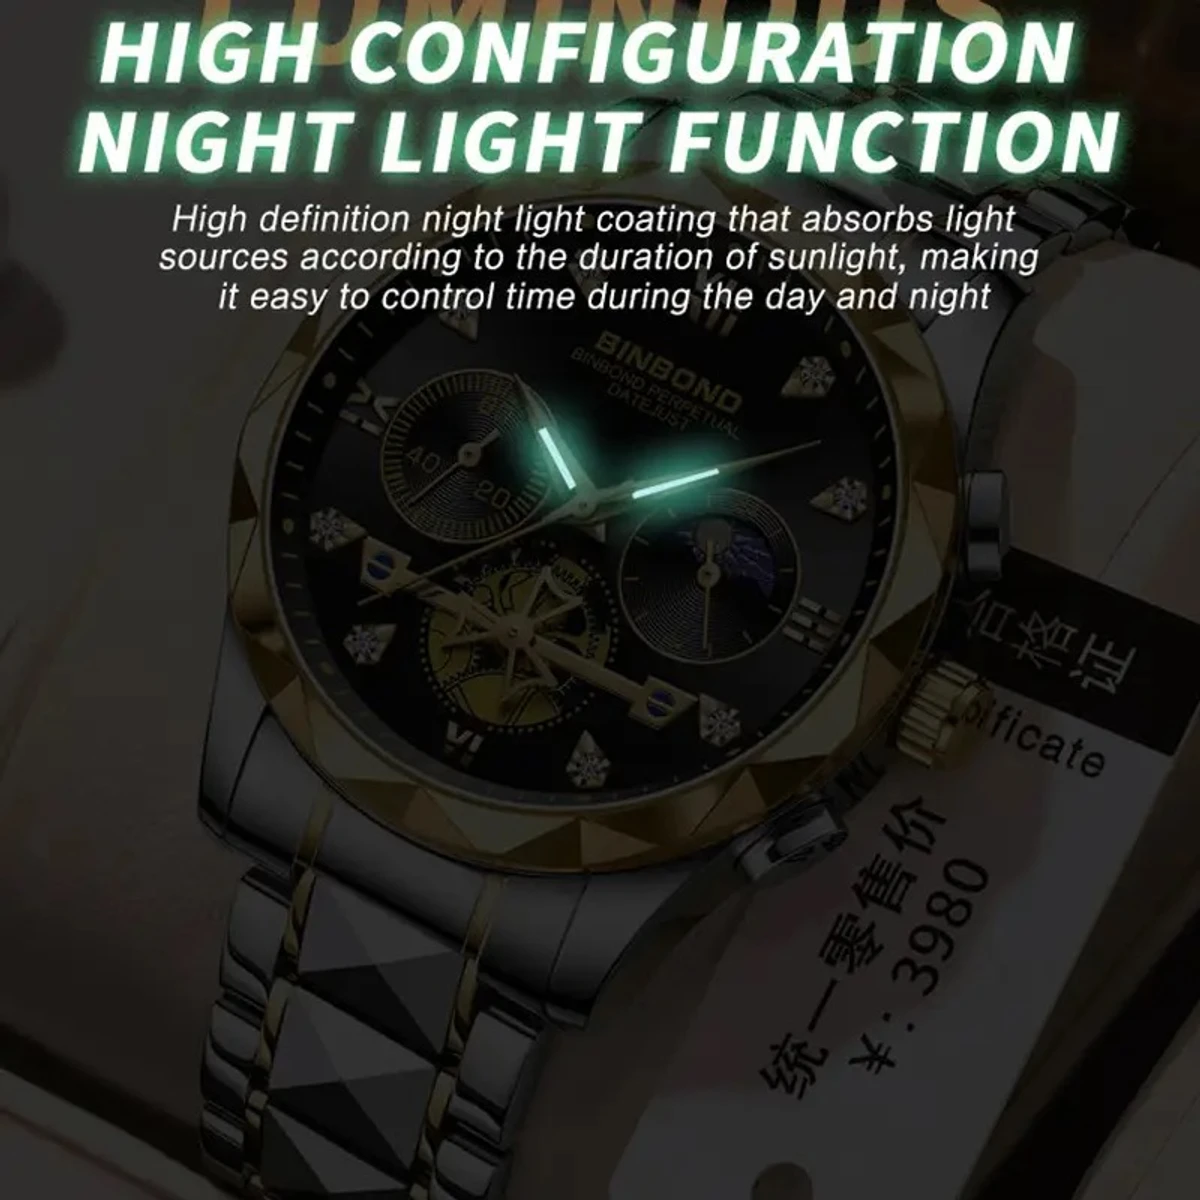 New Luxury Watch For Men Stainless Steel Waterproof Business Sport Wristwatches- Black & Golden